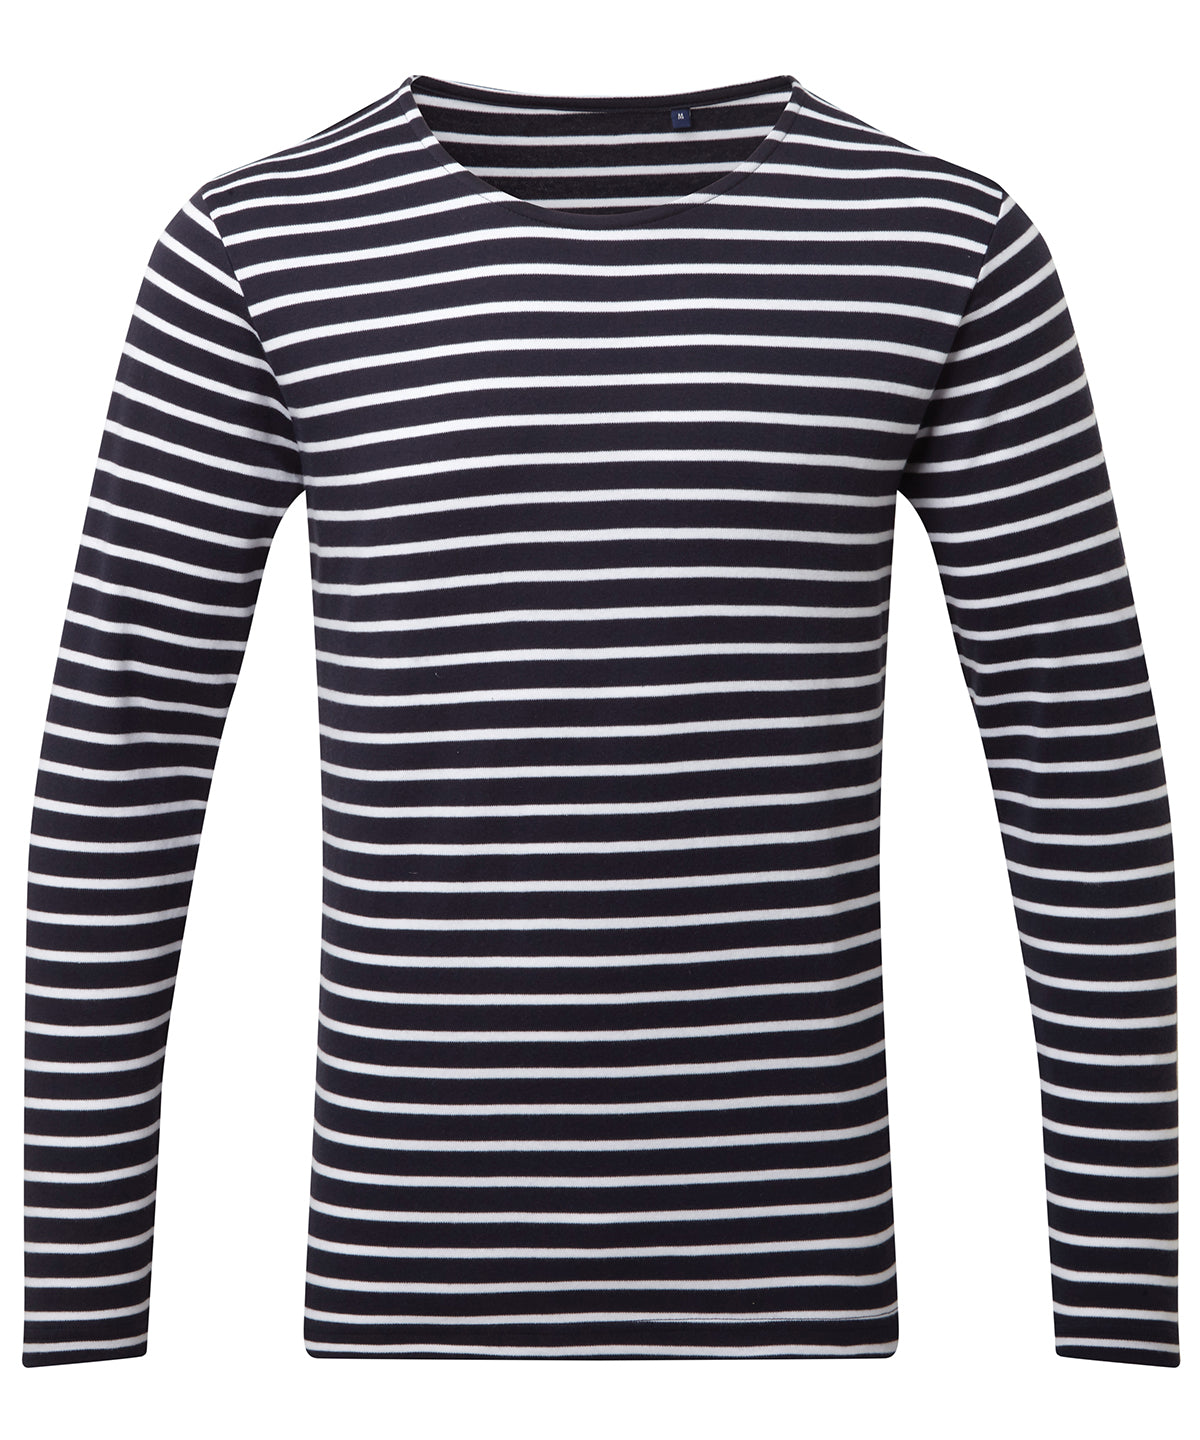 Personalised T-Shirts - Stripes Asquith & Fox Men's Marinière coastal long sleeve tee